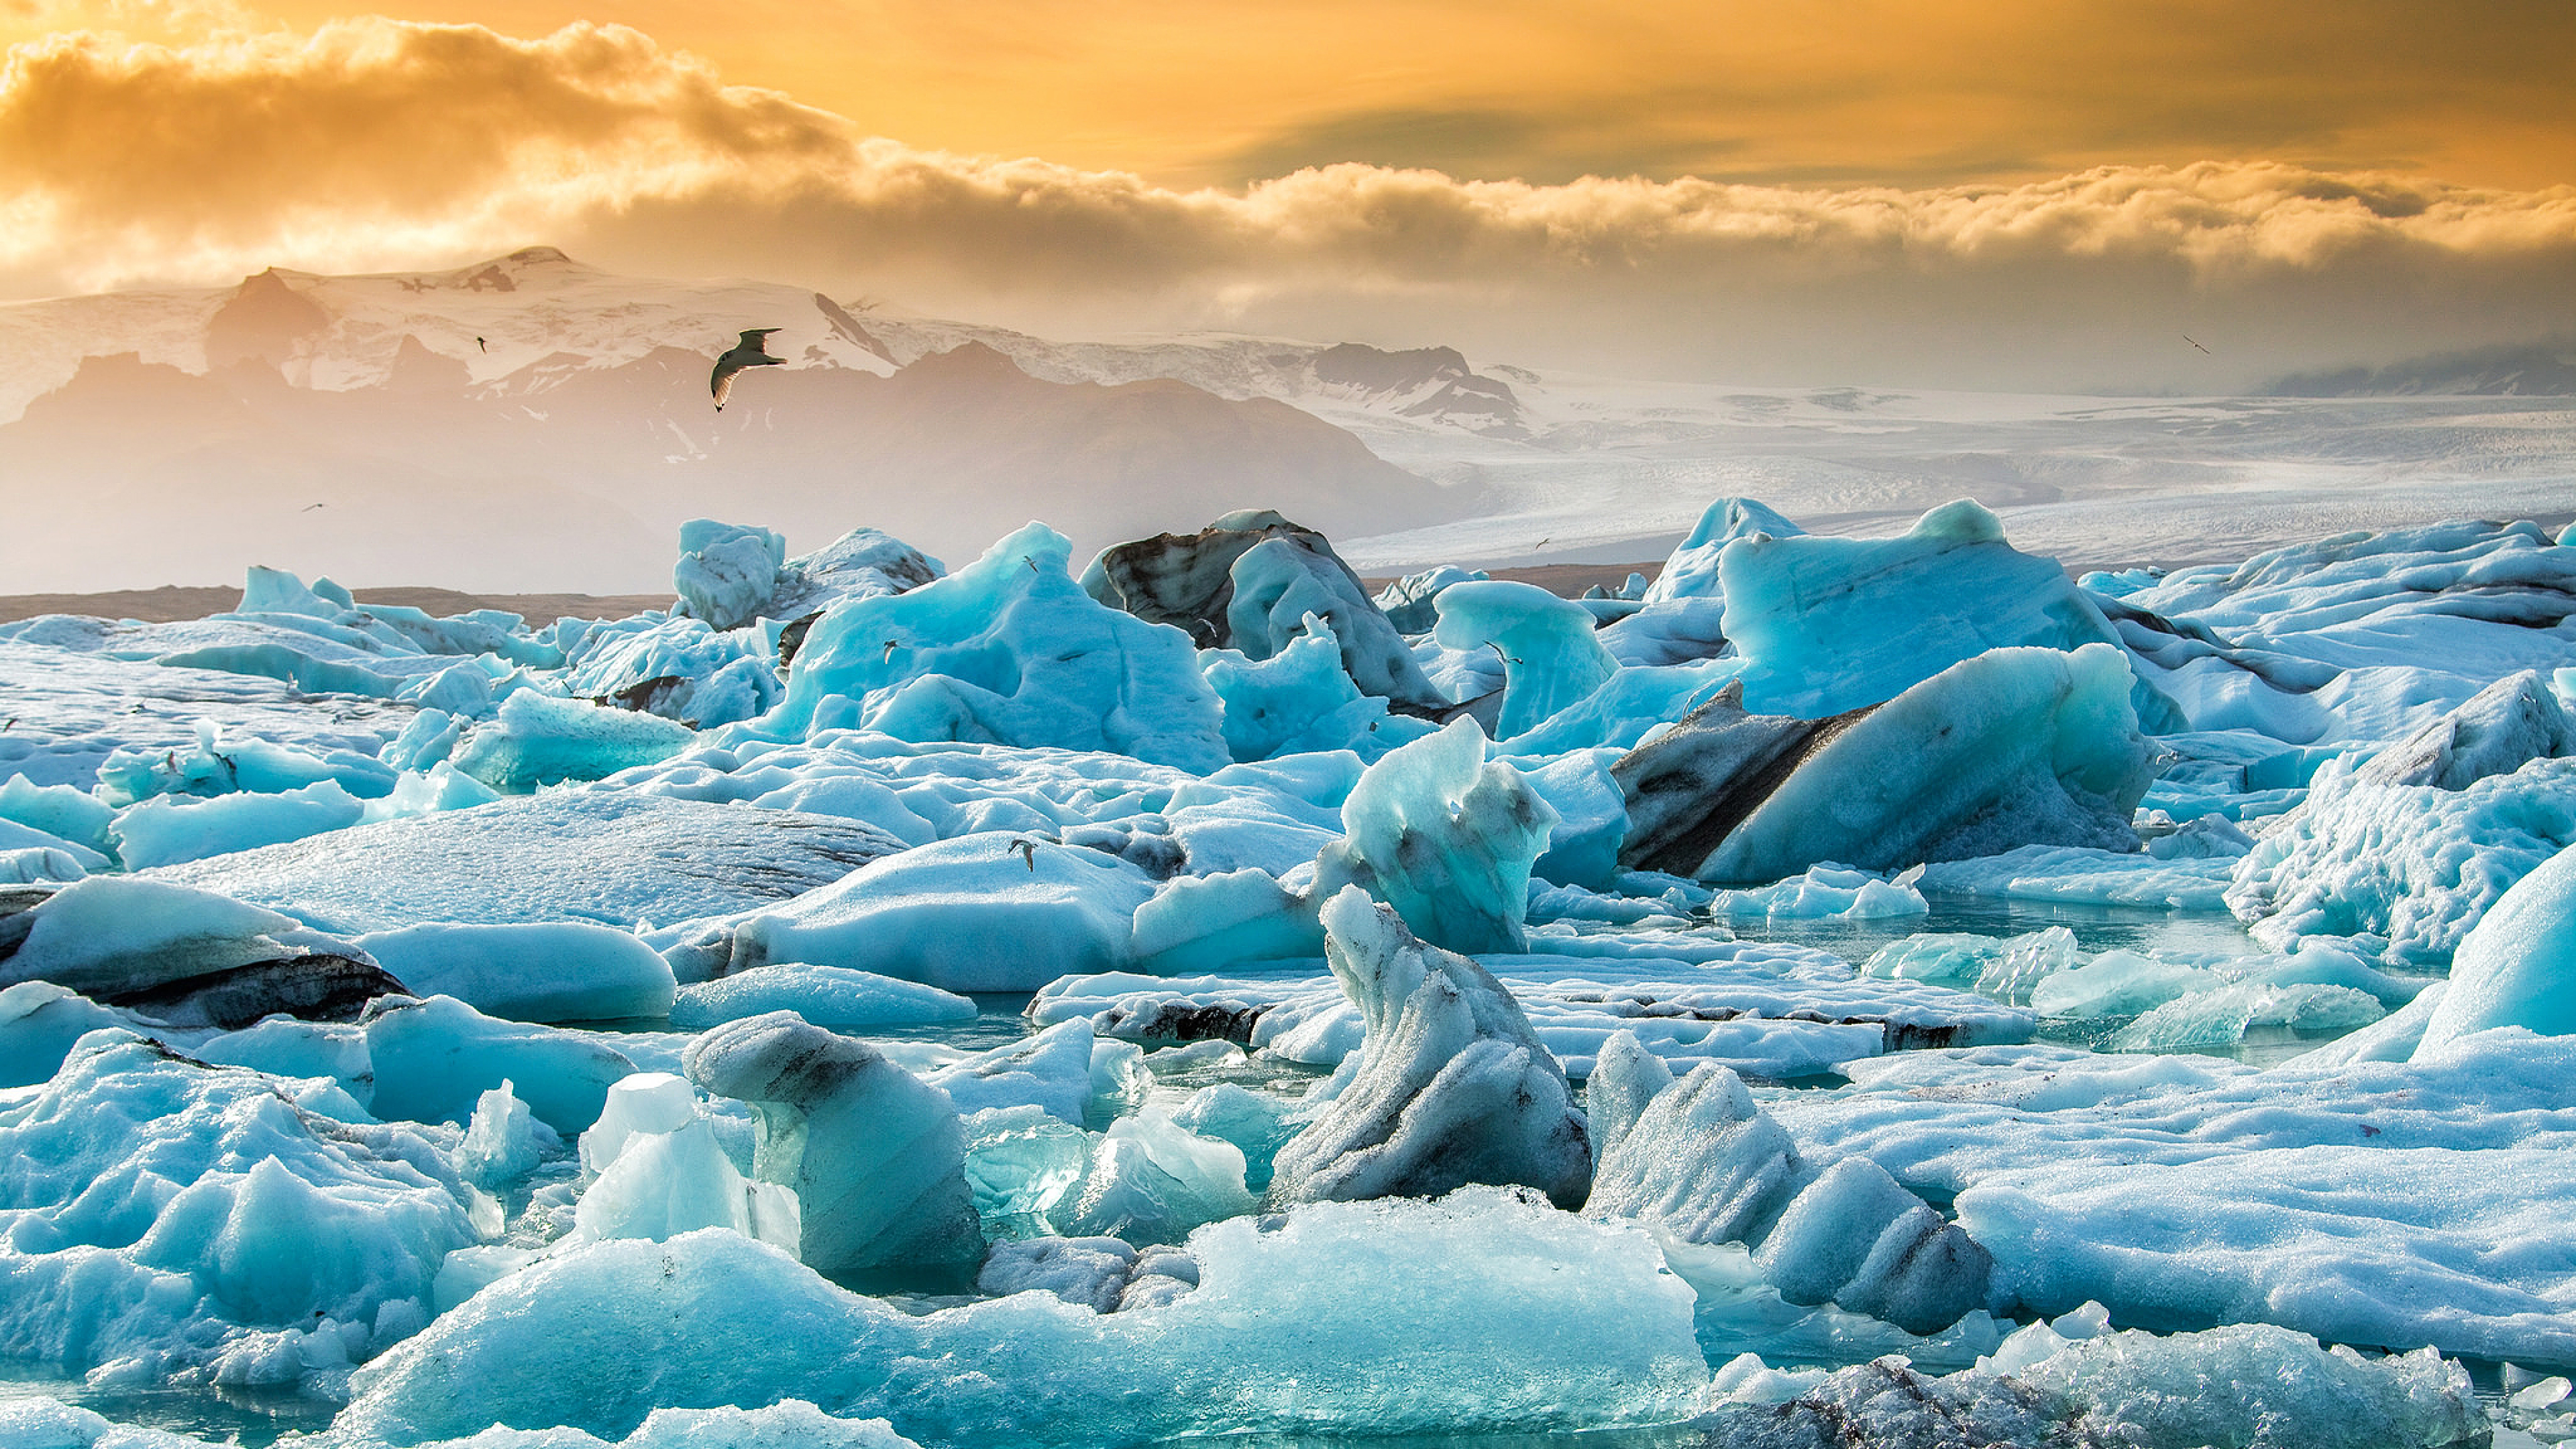 Ледовое море. Ледниковая Лагуна ёкюльсаурлоун Исландия. Ледяная Лагуна Йокульсарлон в Исландии. Исландия Северный Ледовитый океан. Арктика Северный Ледовитый океан.